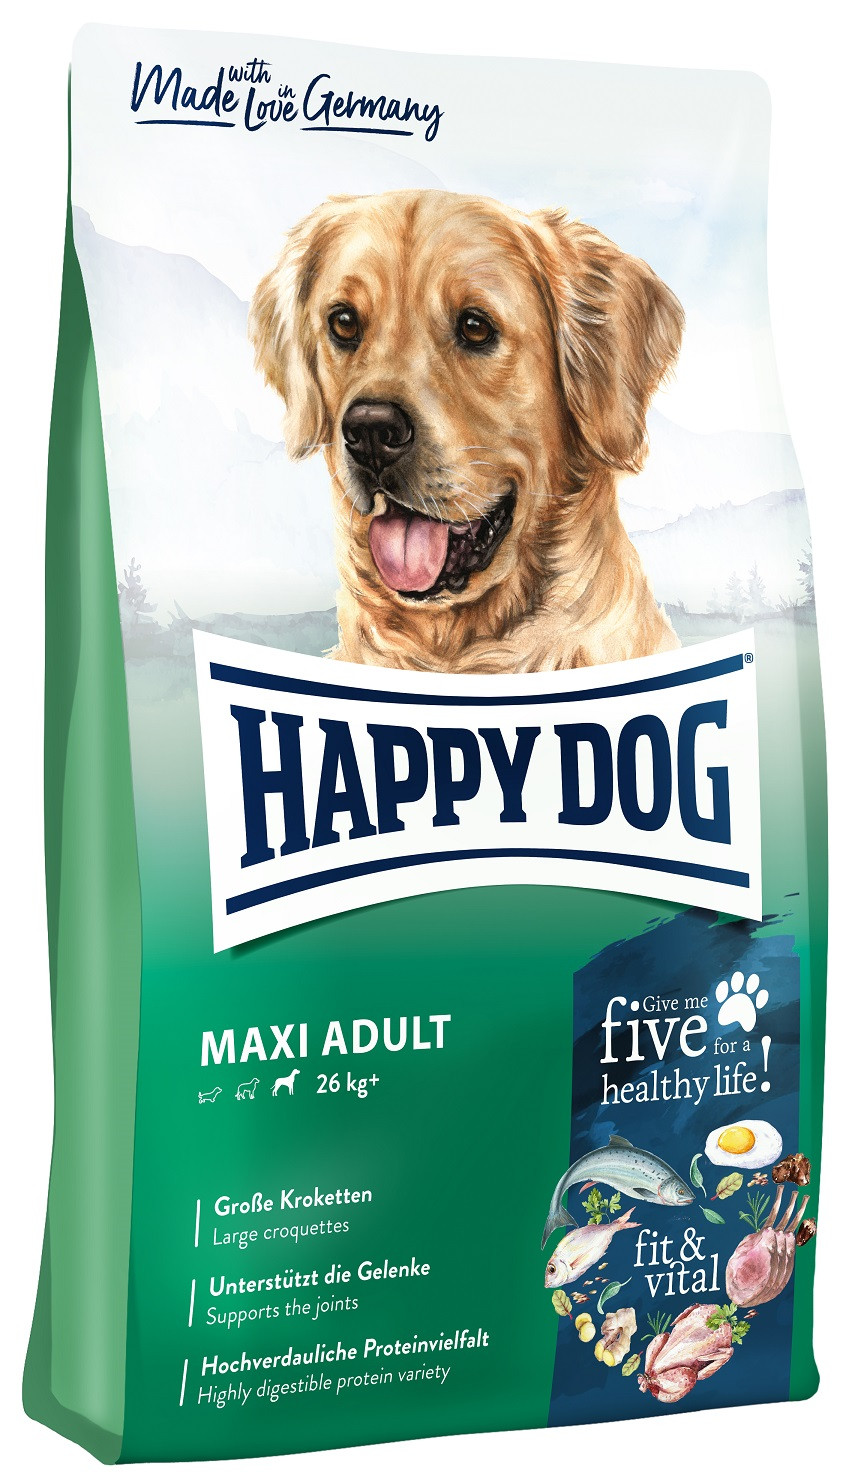 Happy Dog Supreme Maxi Adult per cane